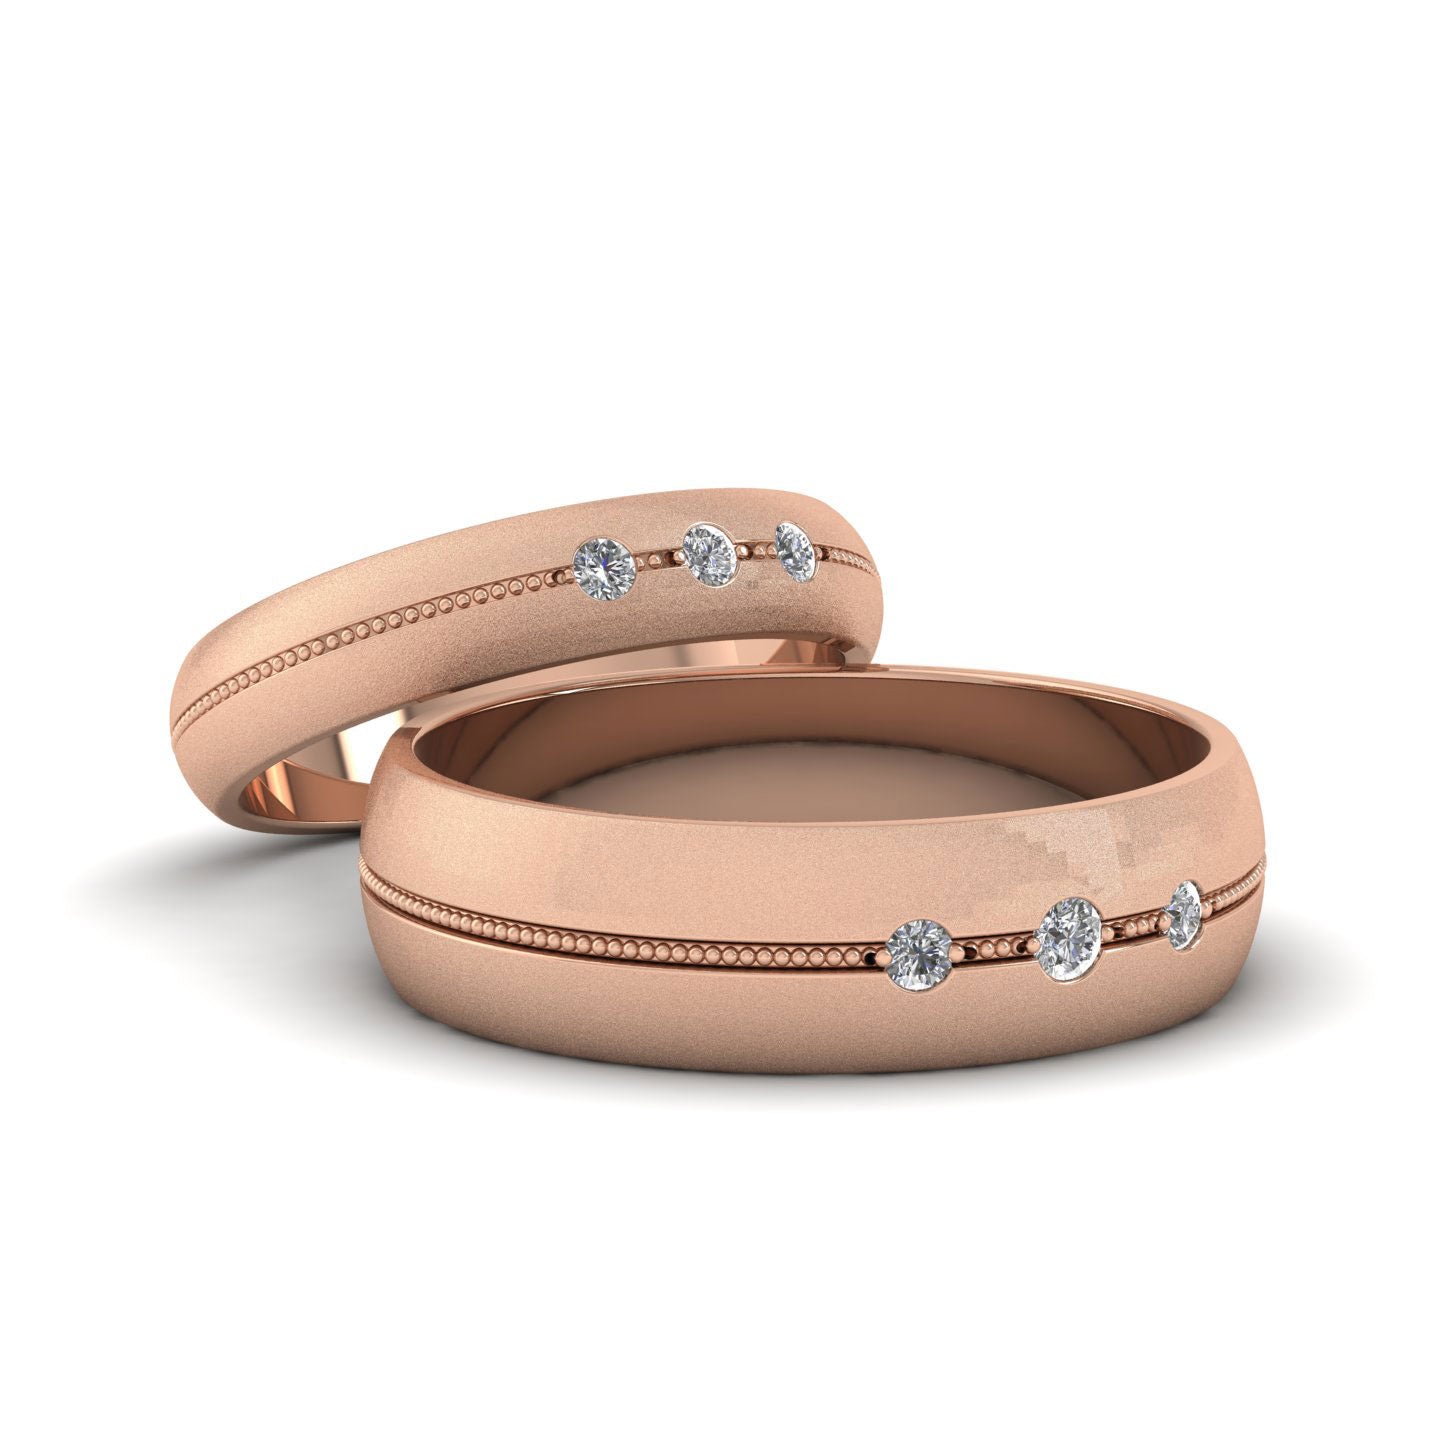 Three Diamond And Centre Millgrain Pattern 18ct Rose Gold 4mm Wedding Ring